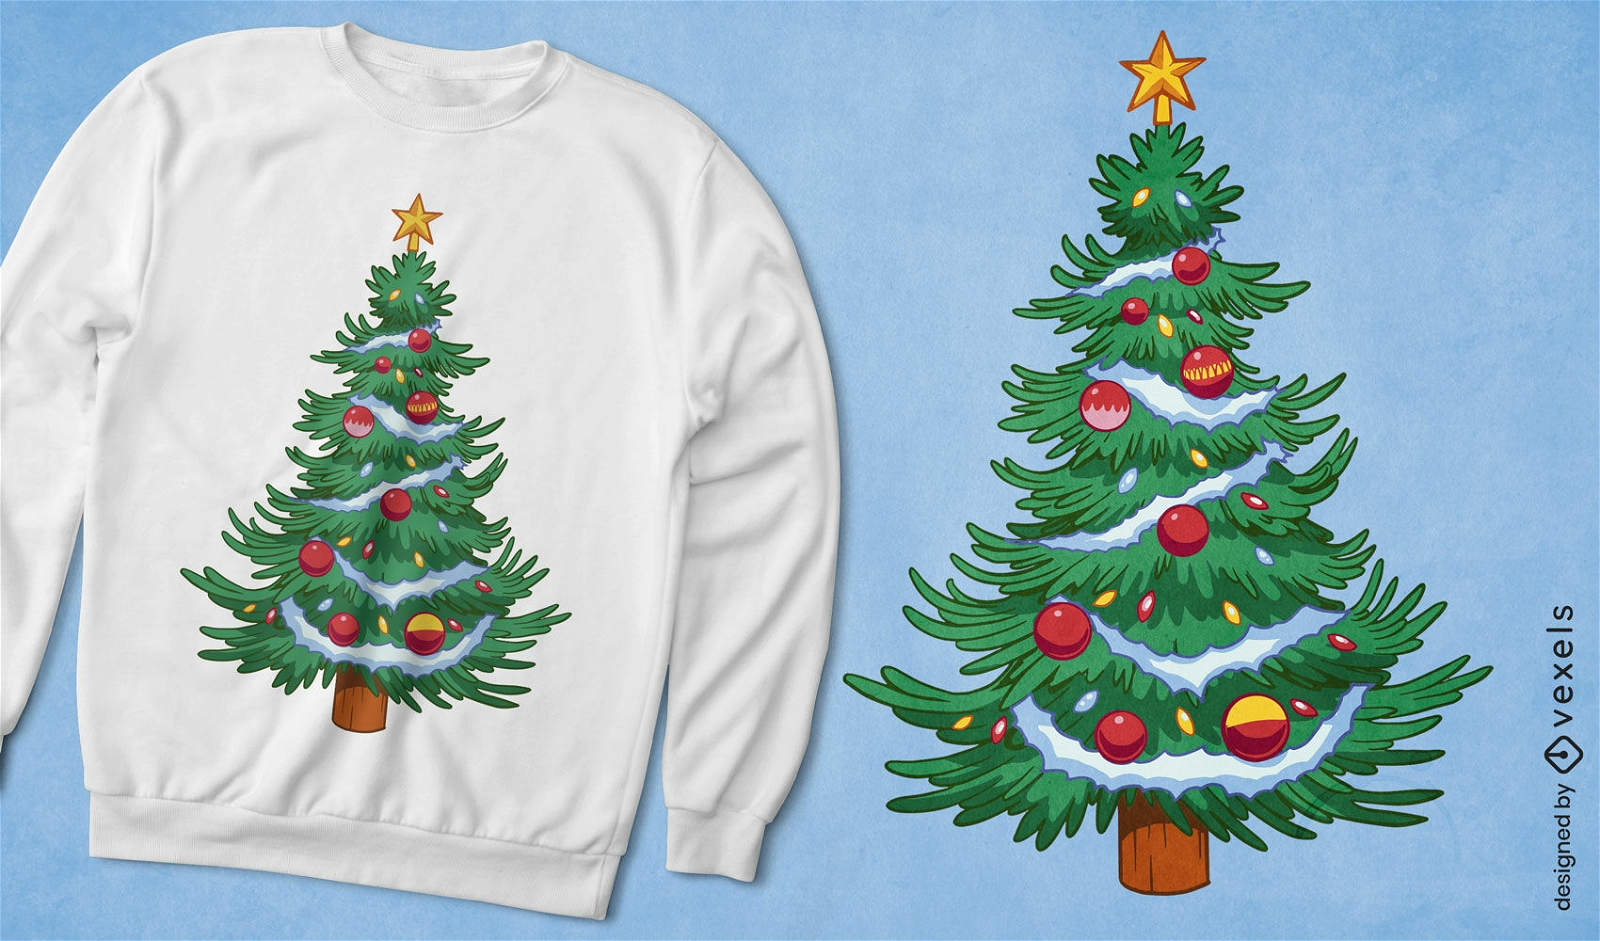 Decorated christmas tree t-shirt design